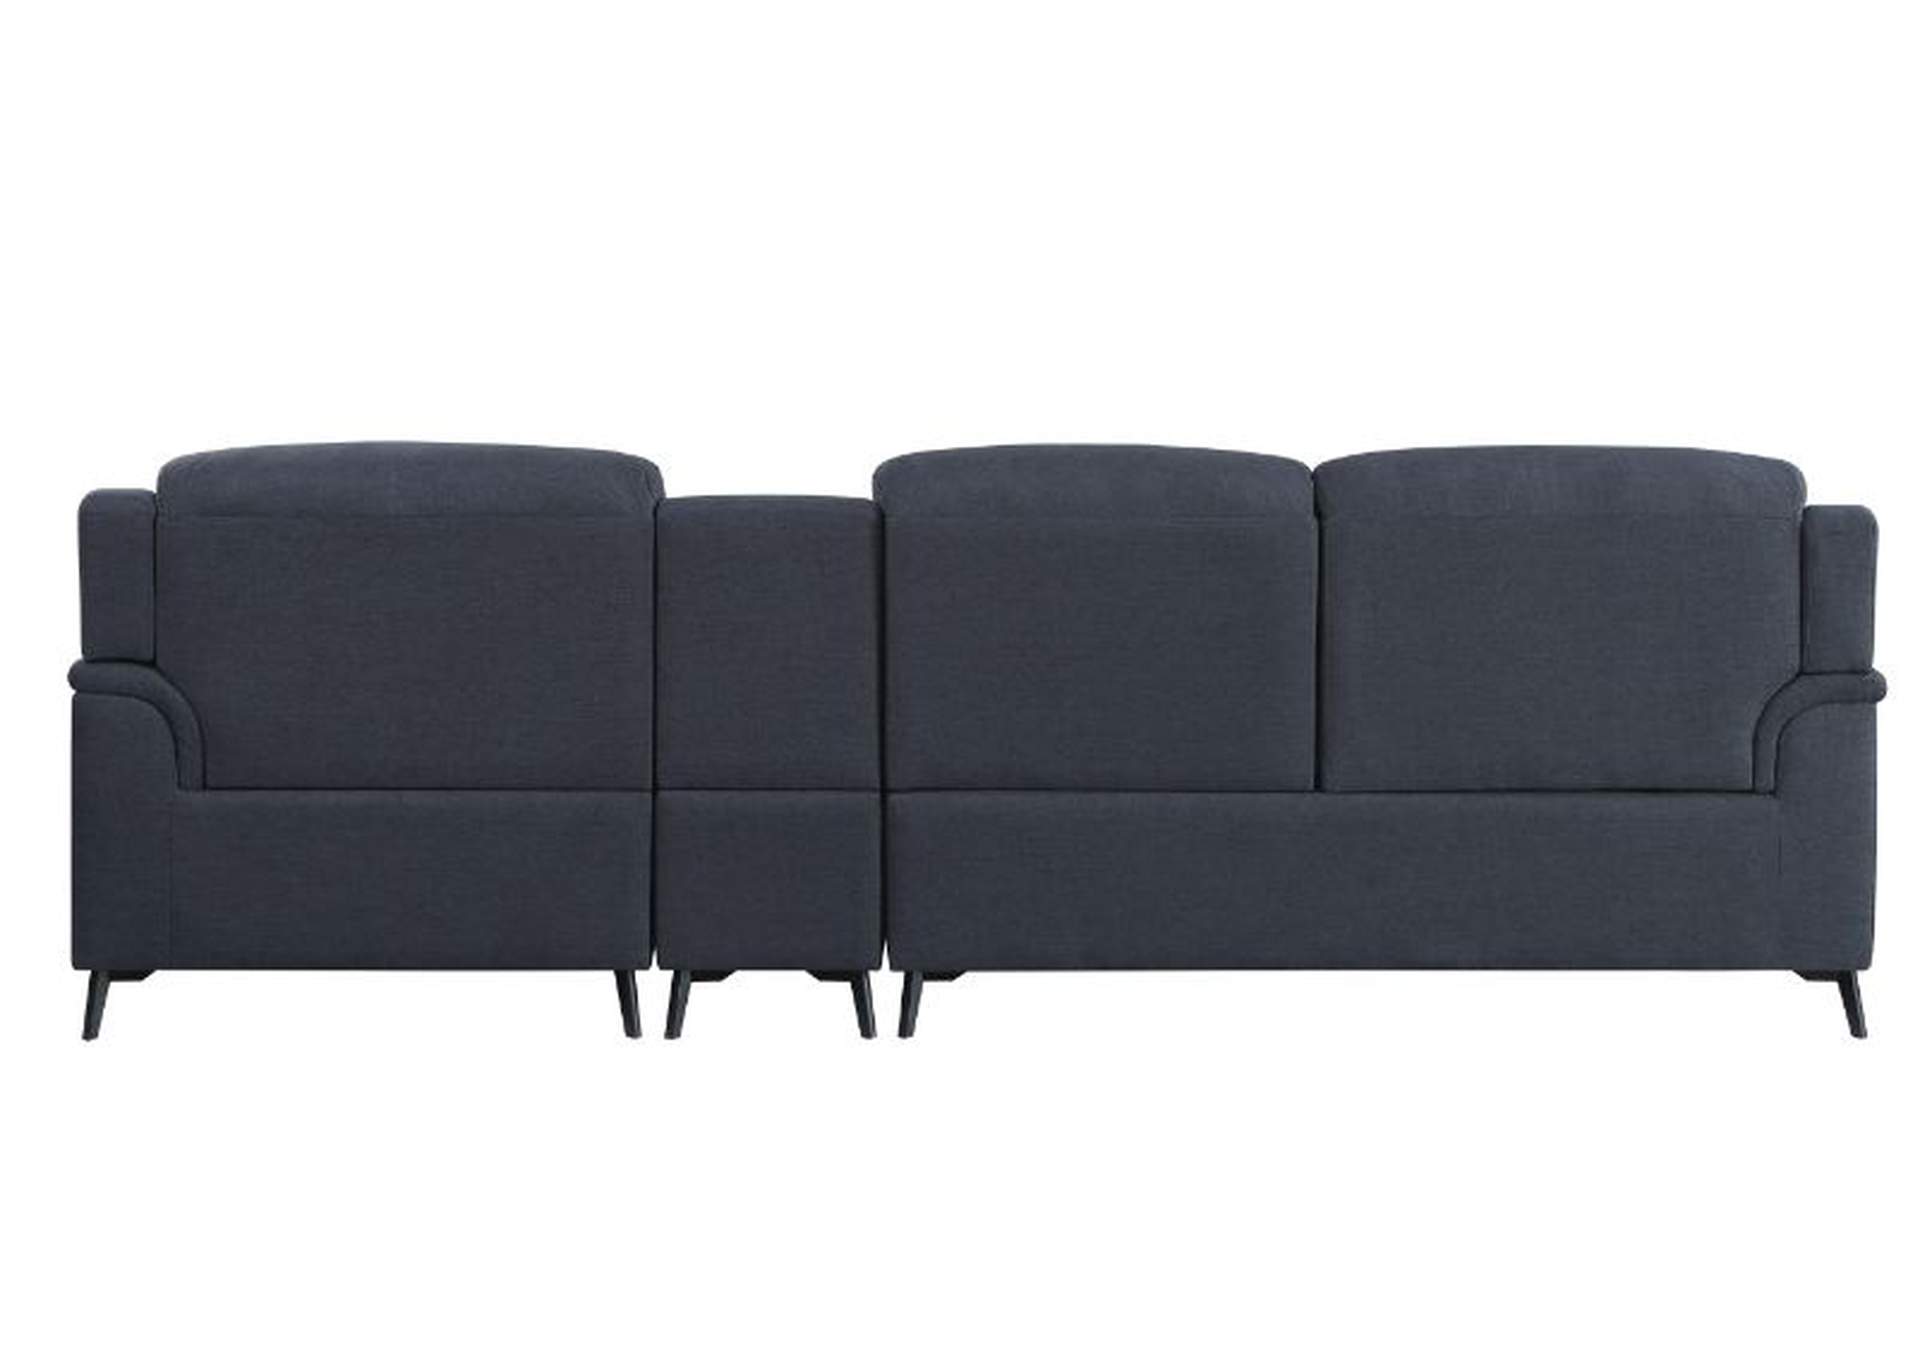 Walcher Sectional Sofa,Acme